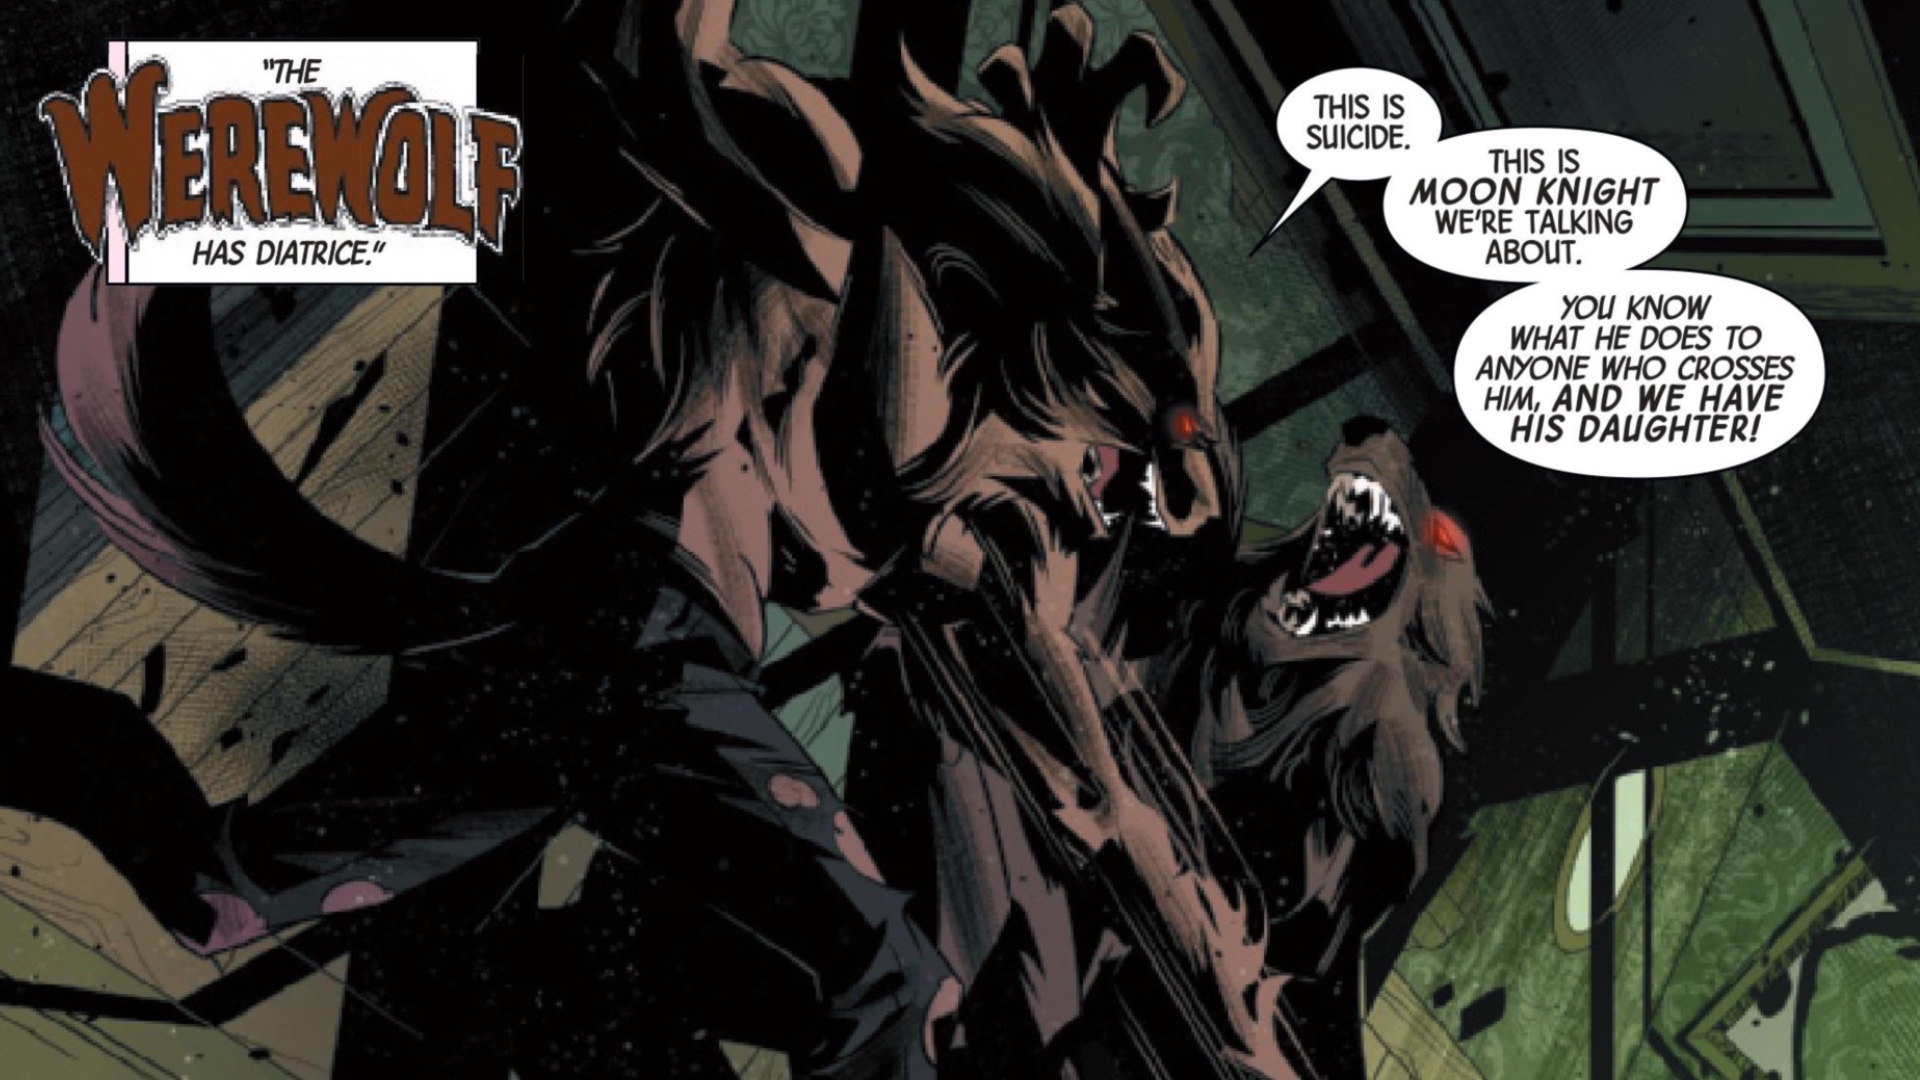 Werewolf by Night: Origin Story